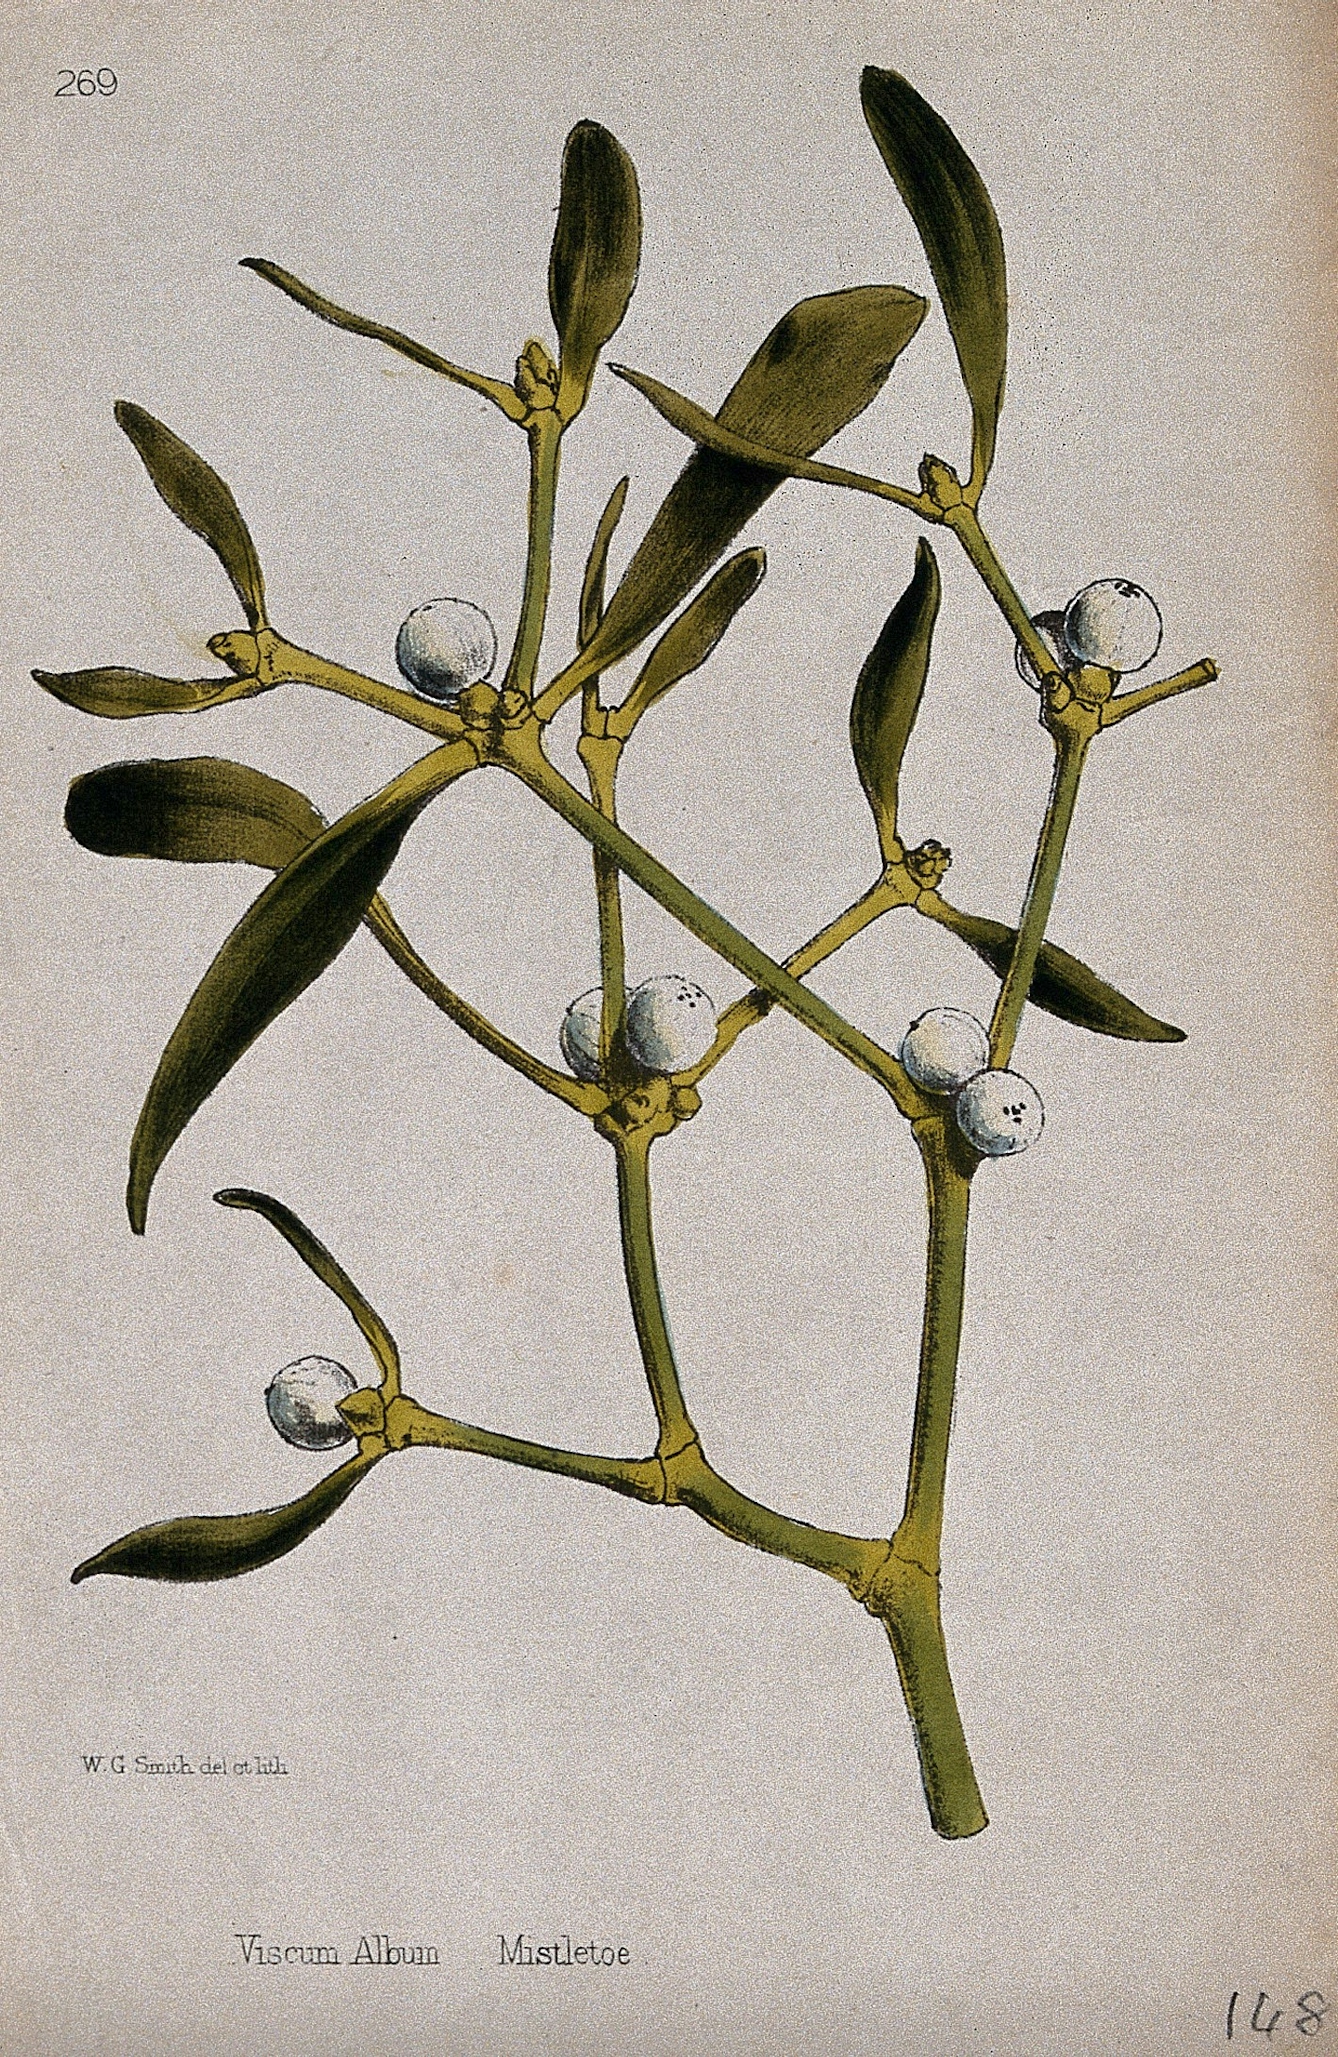 Illustration of Mistletoe